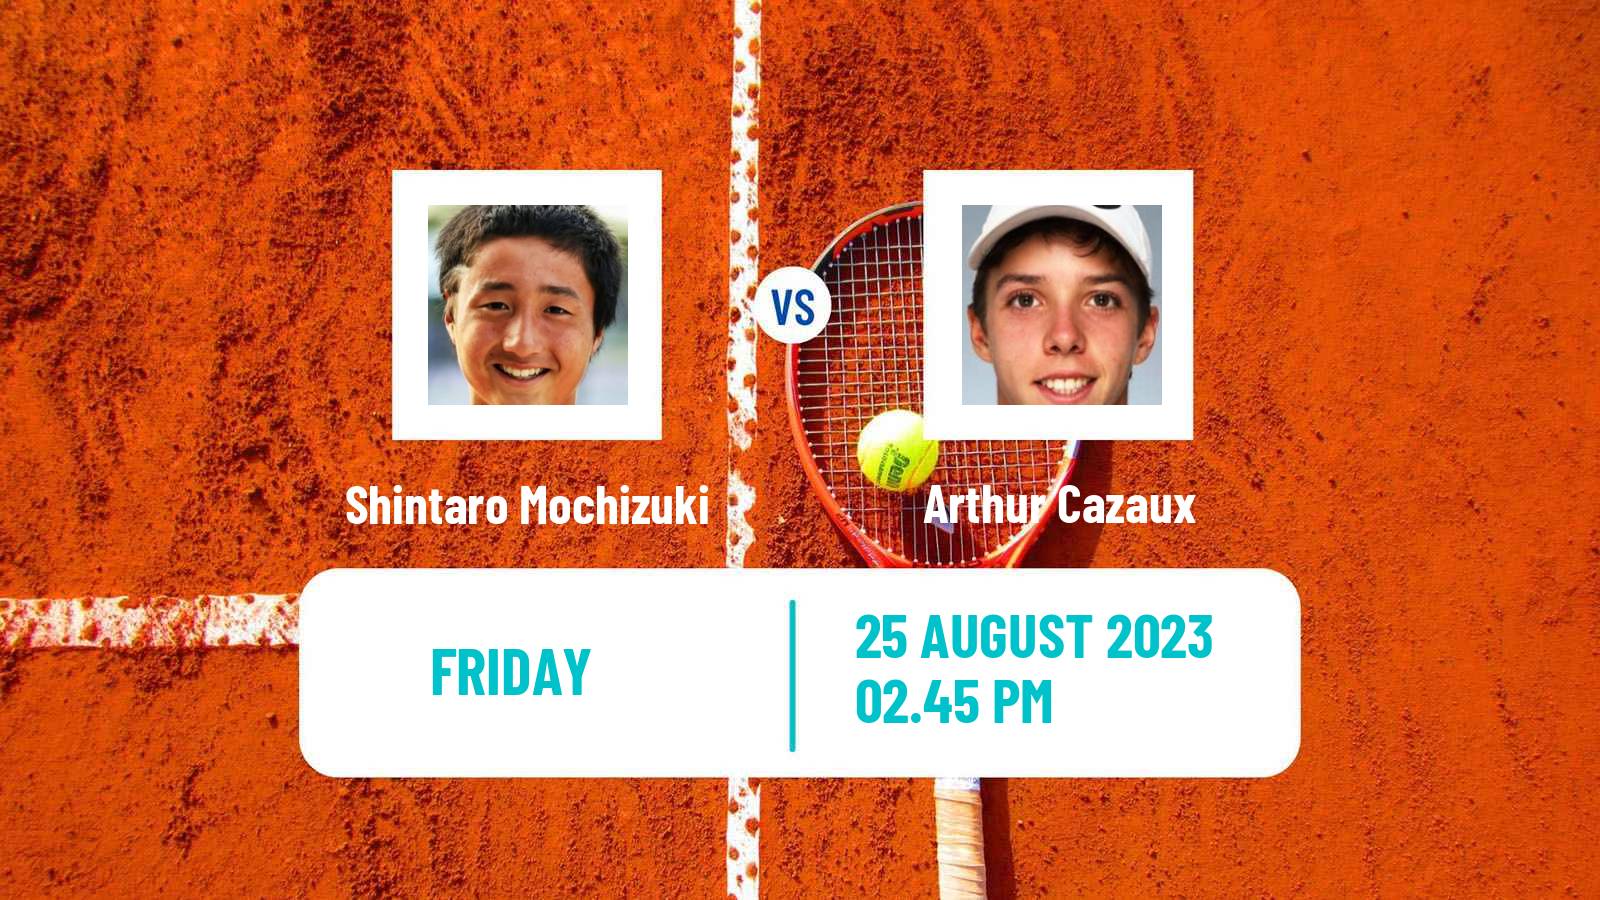 Tennis ATP US Open Shintaro Mochizuki - Arthur Cazaux